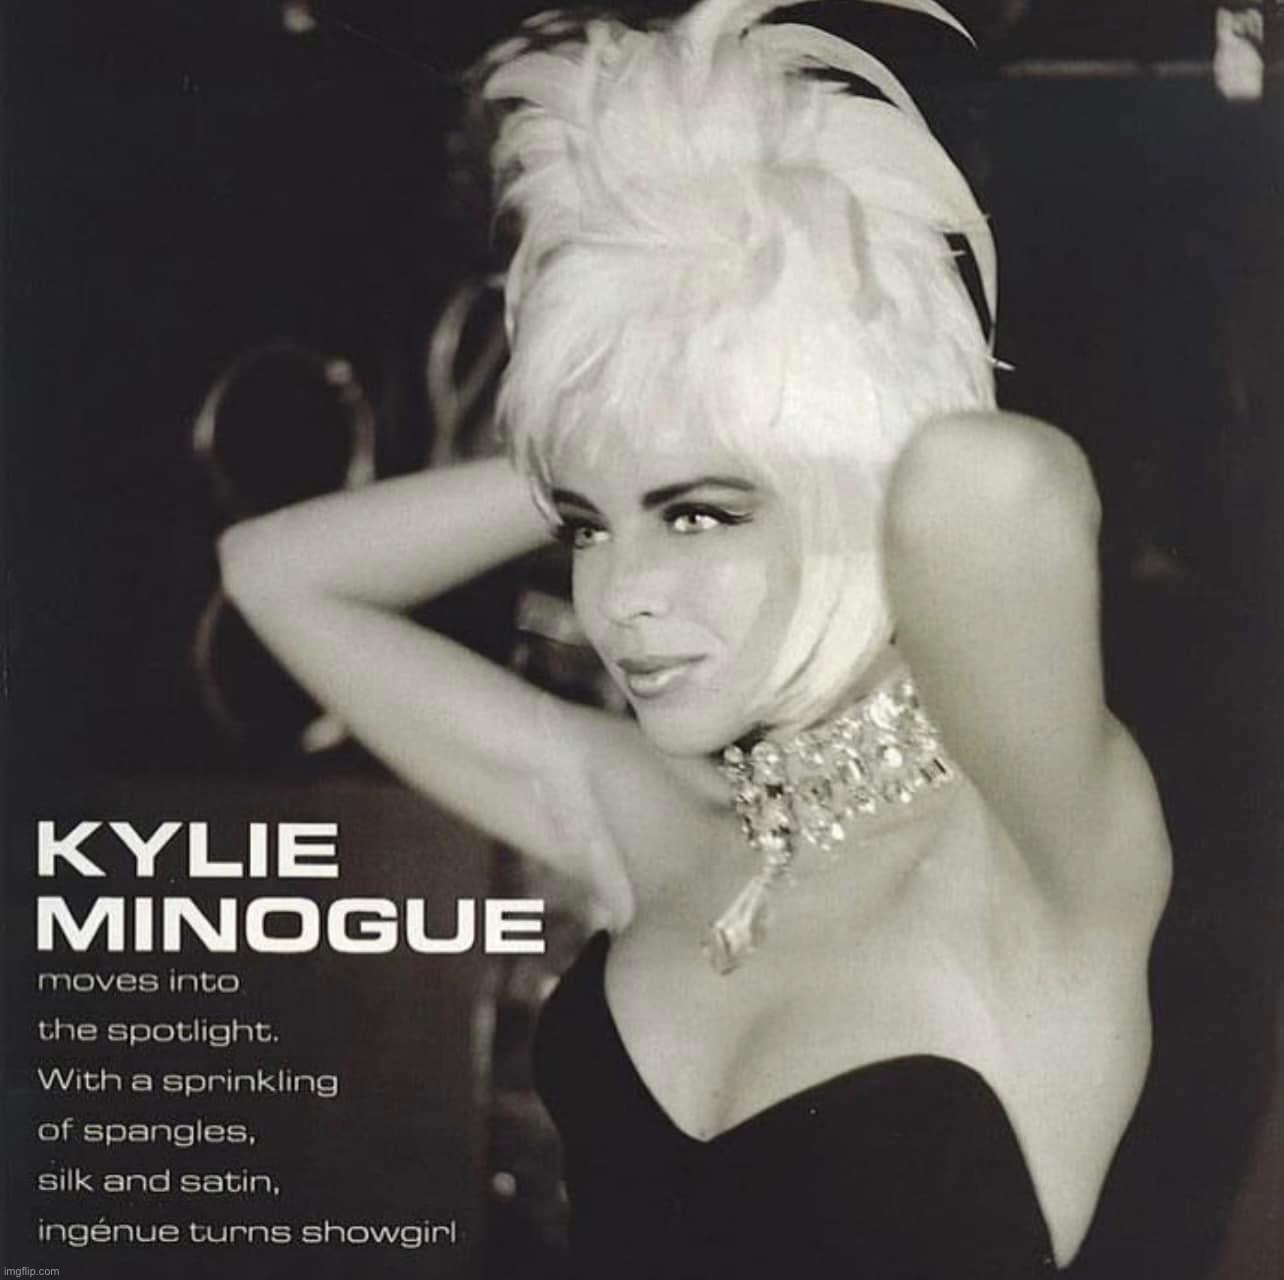 Kylie Minogue ingenue turns showgirl | image tagged in kylie minogue ingenue turns showgirl | made w/ Imgflip meme maker